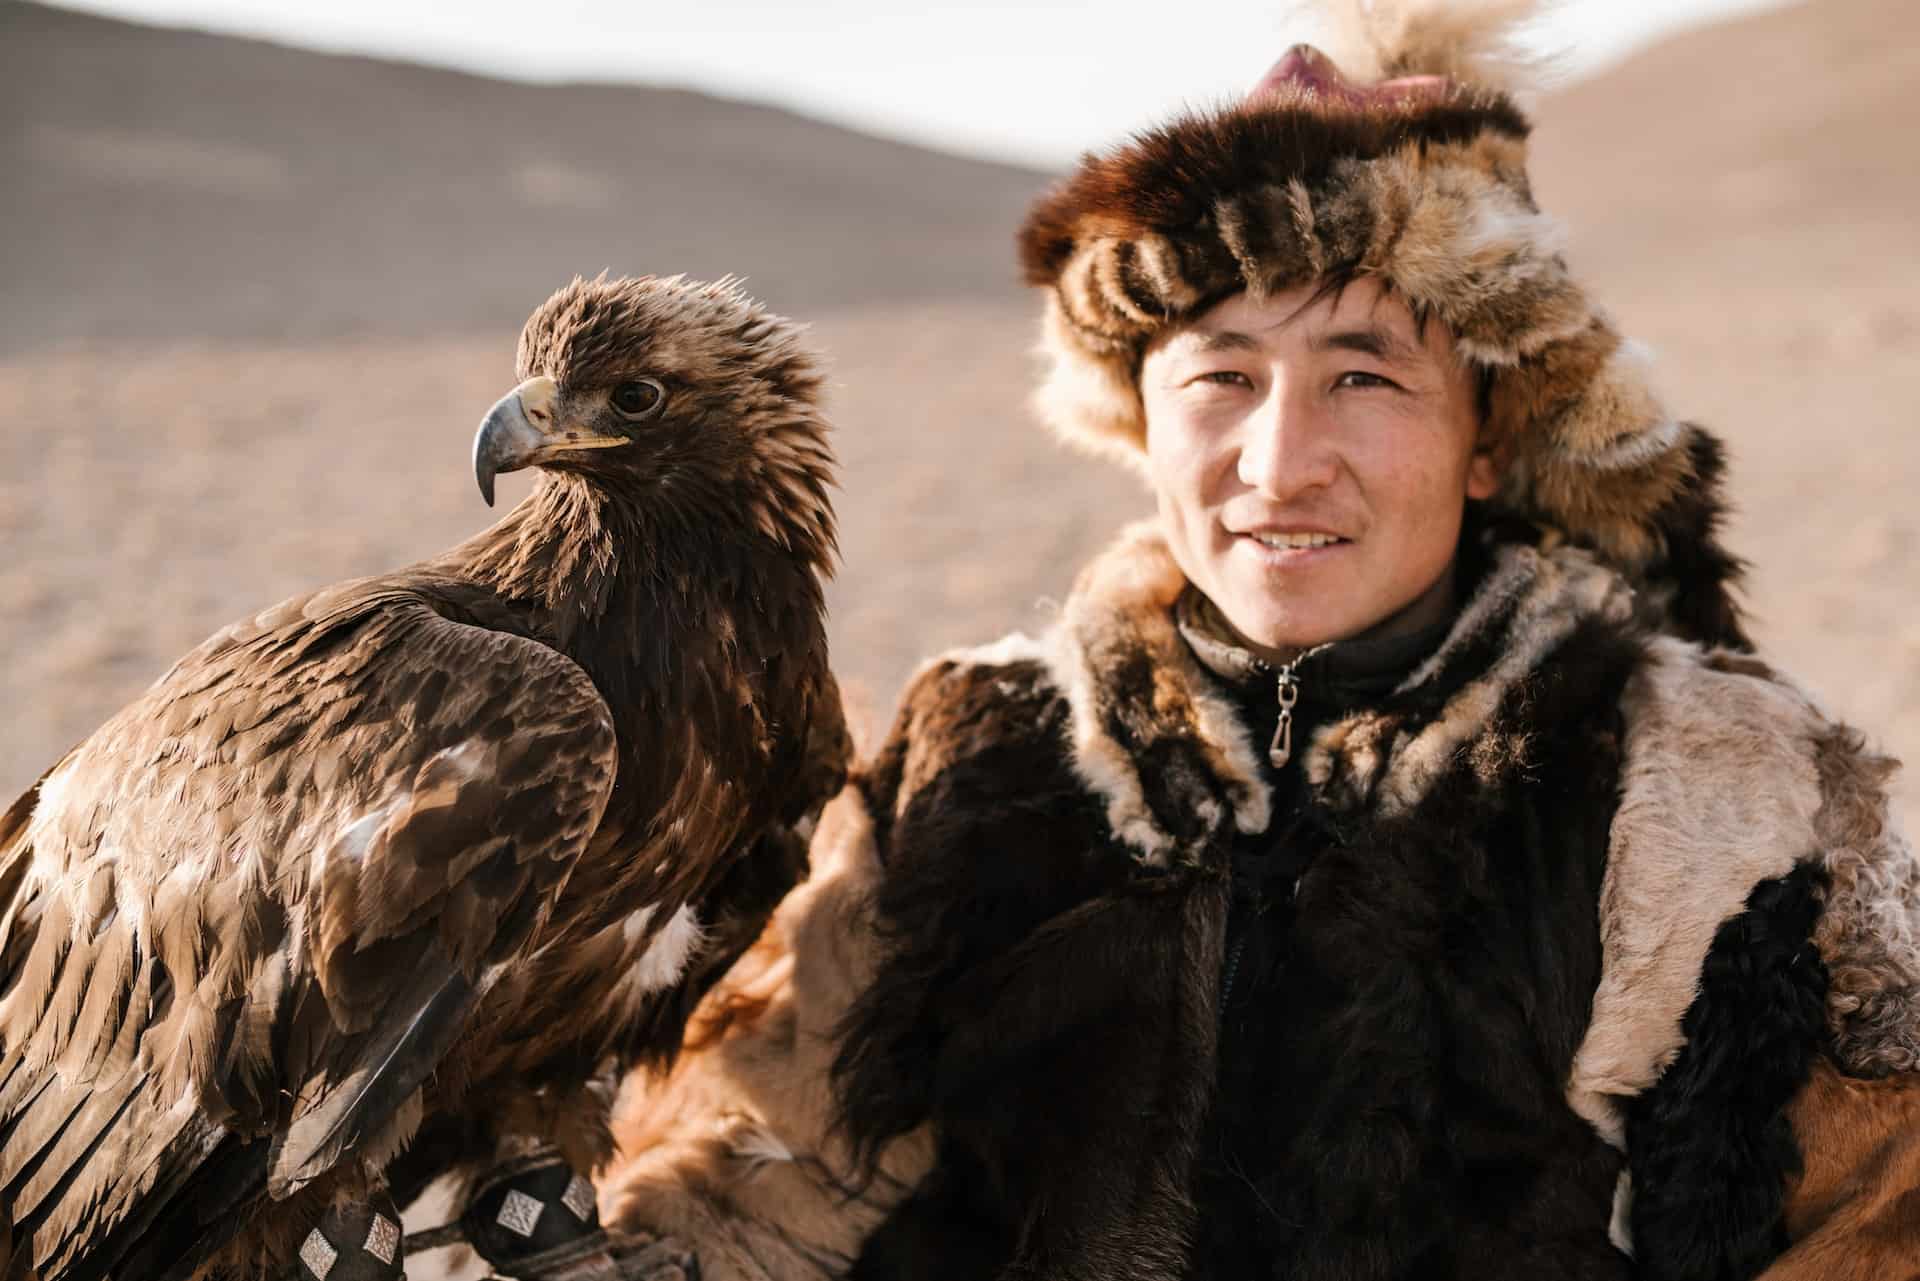 Mongolian Falconer and Eagle as a Hobby